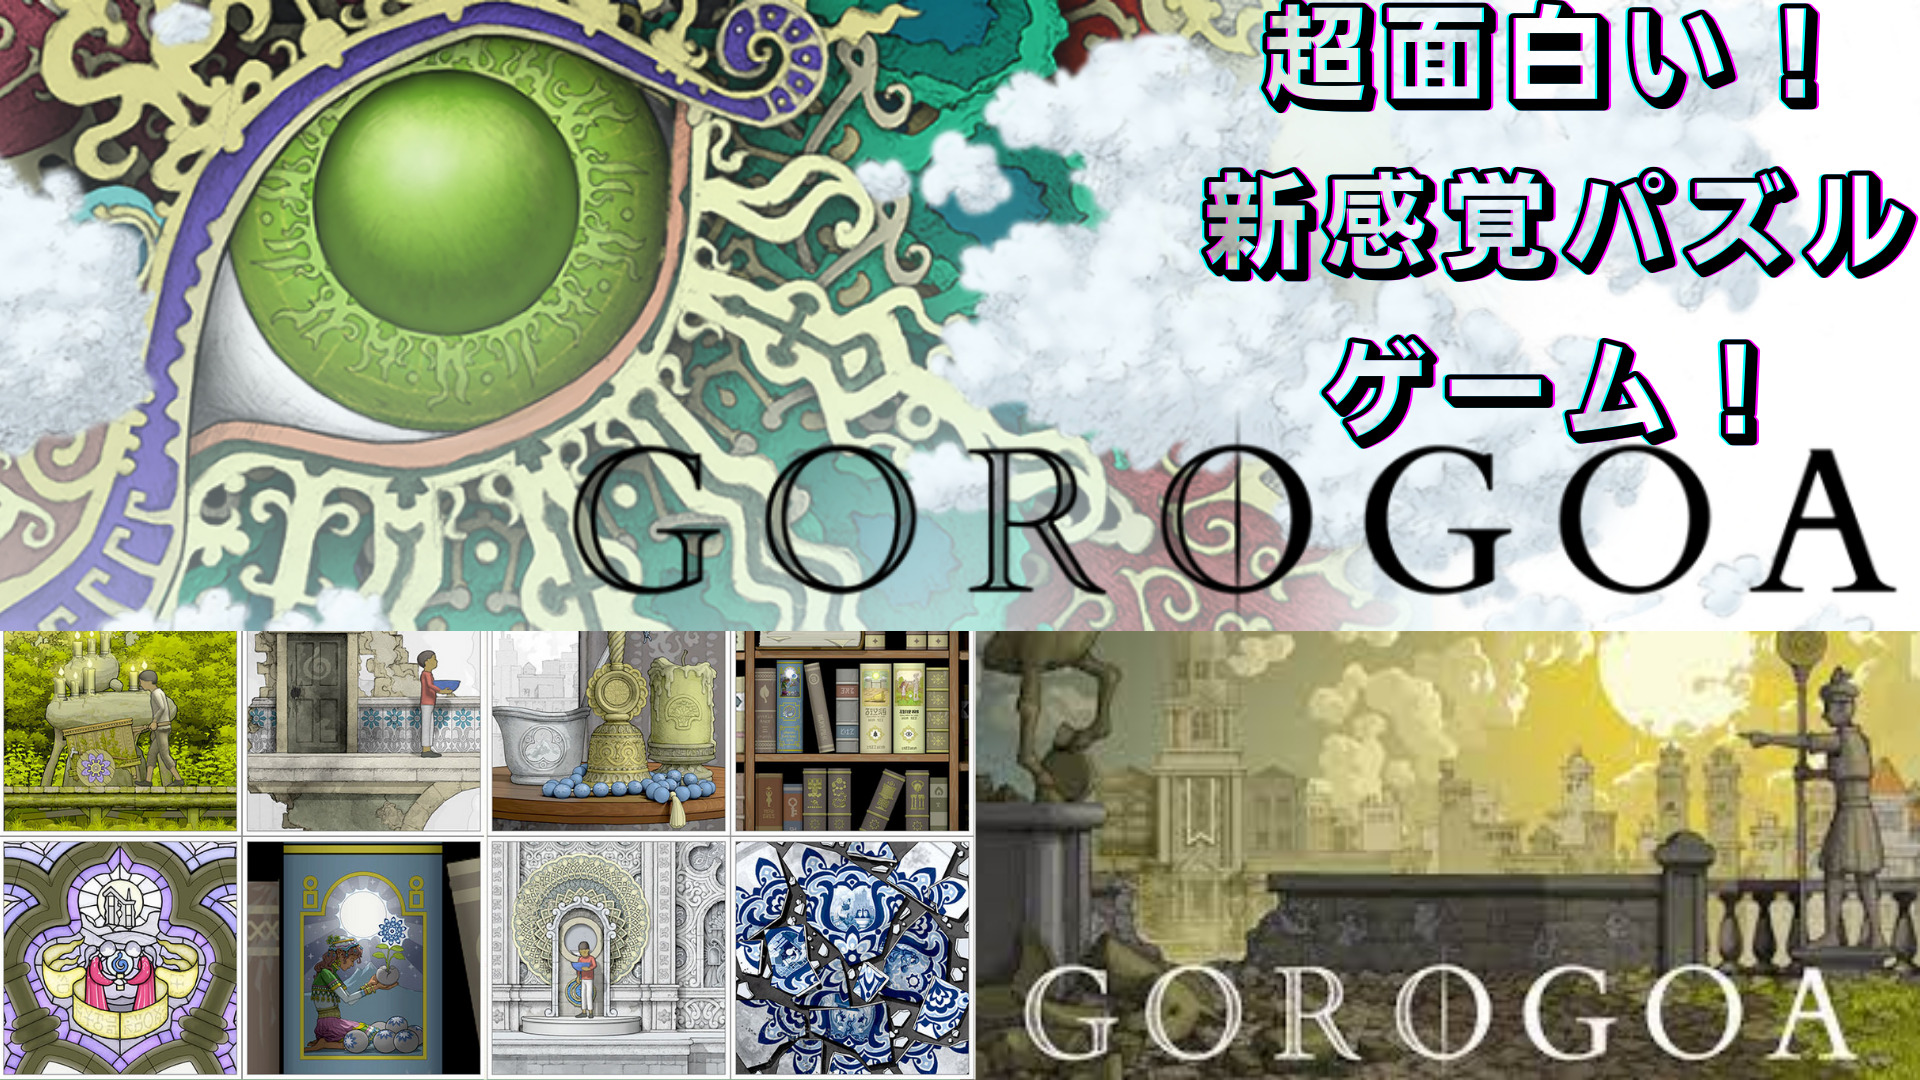 Gorogoaゴロゴア 新体感な謎解きパズルが超面白いのでおすすめしたい ばなおのゲームブログ